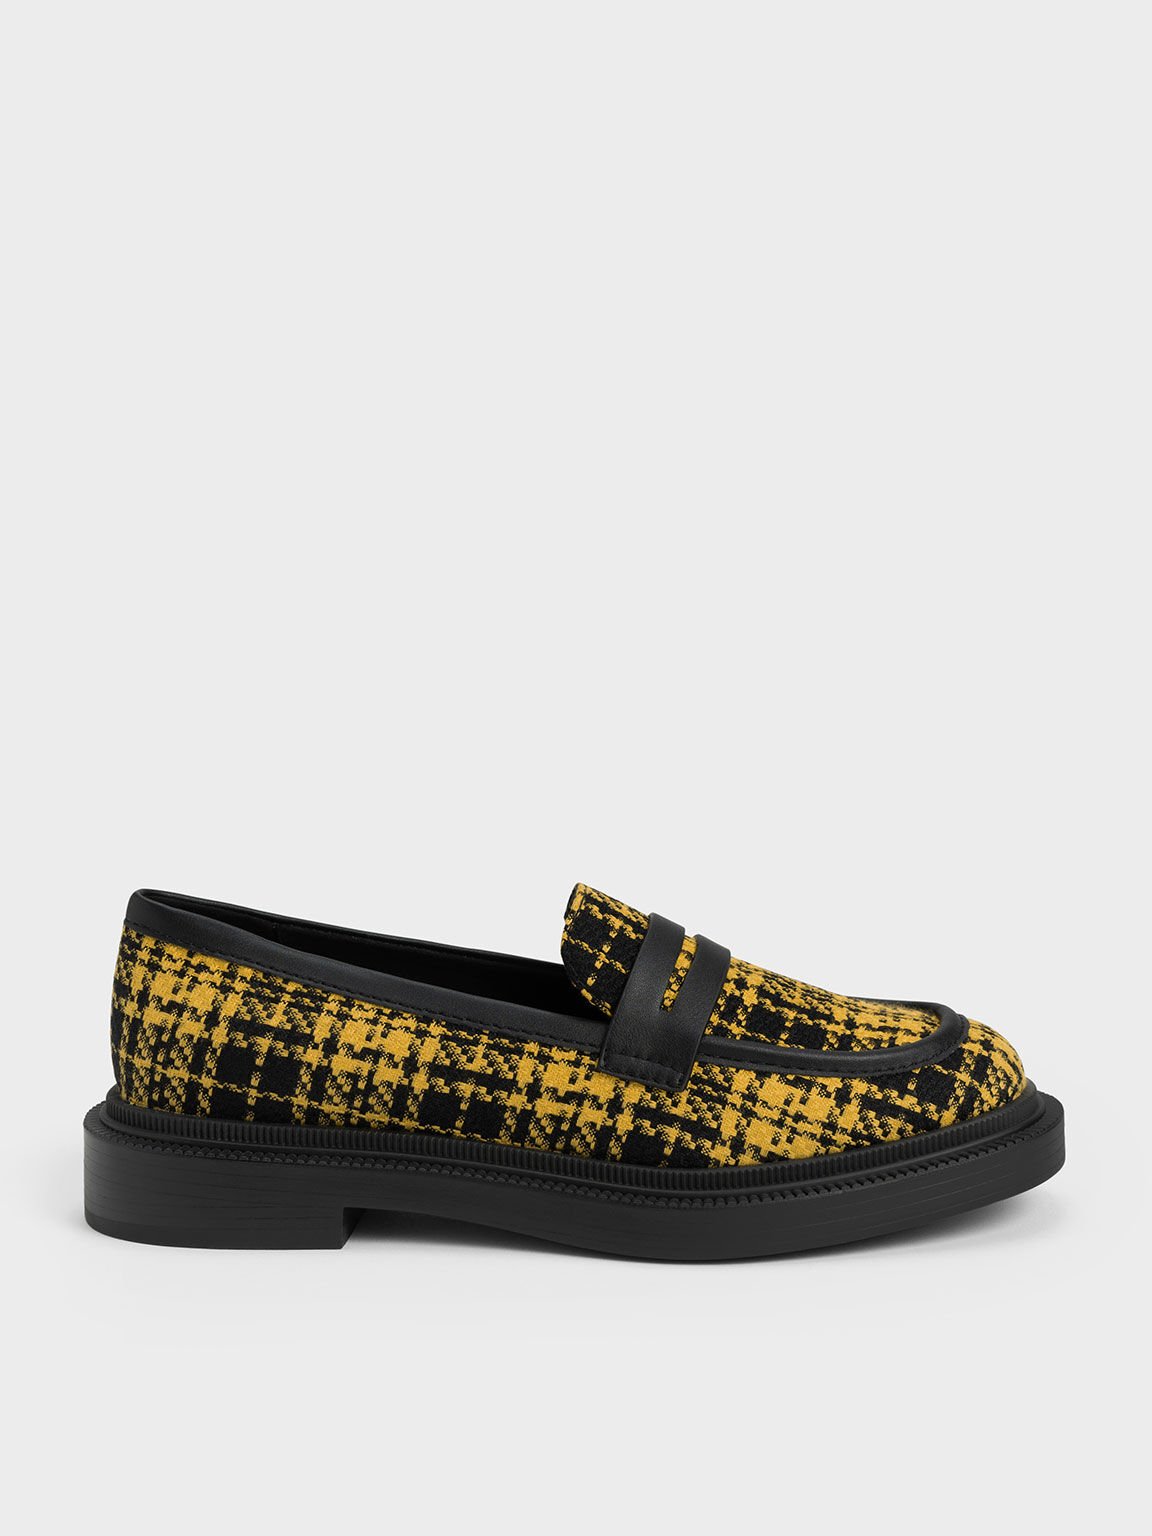 格紋厚底樂福鞋, 黃色, hi-res